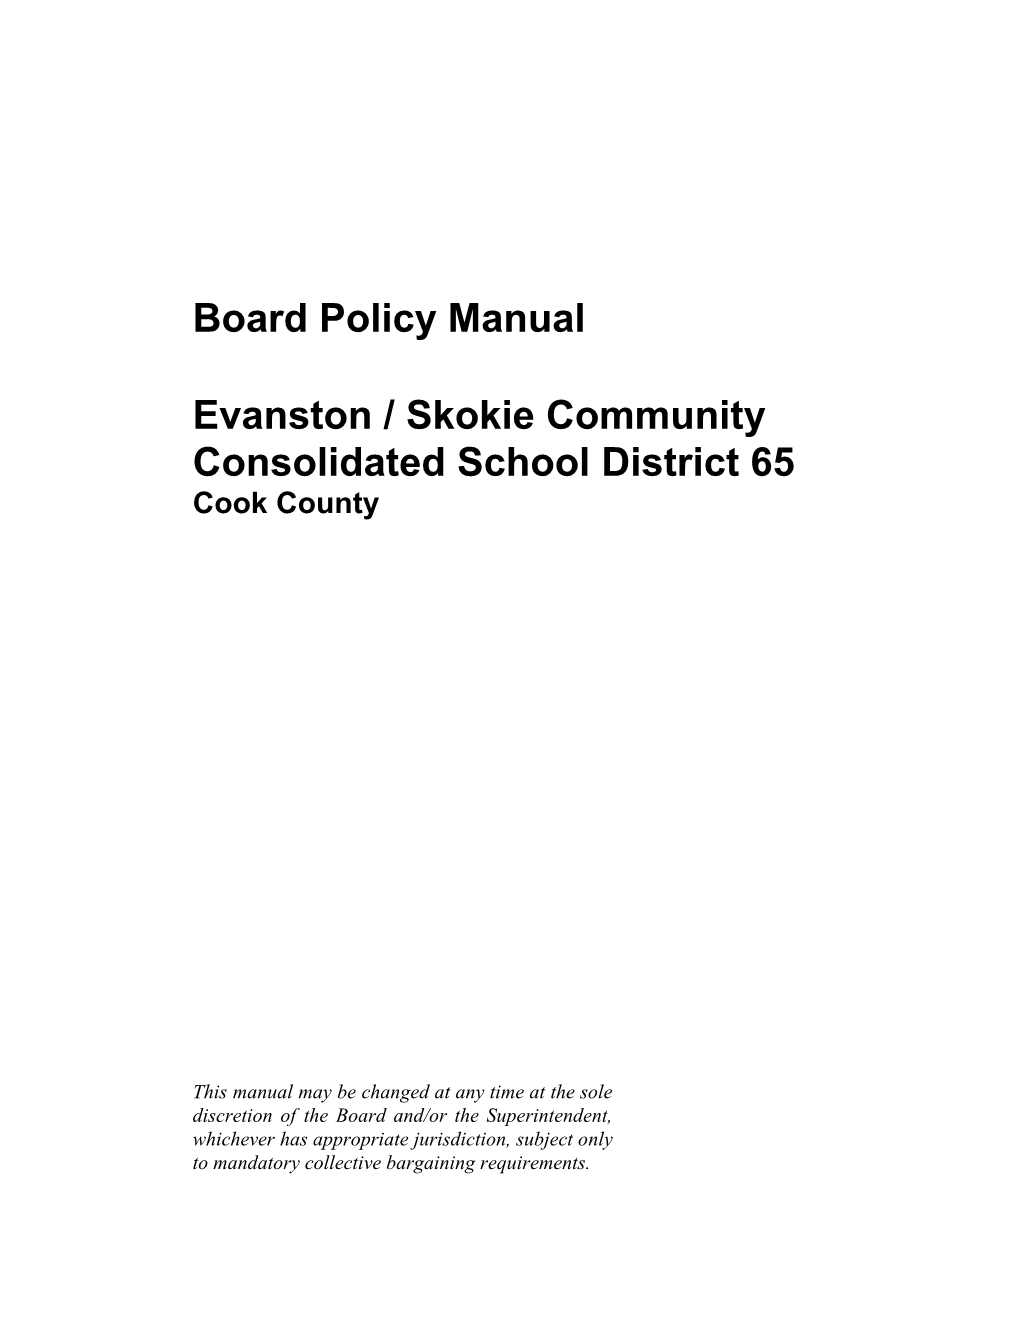 Board Policy Manual Evanston / Skokie Community Consolidated School District 65